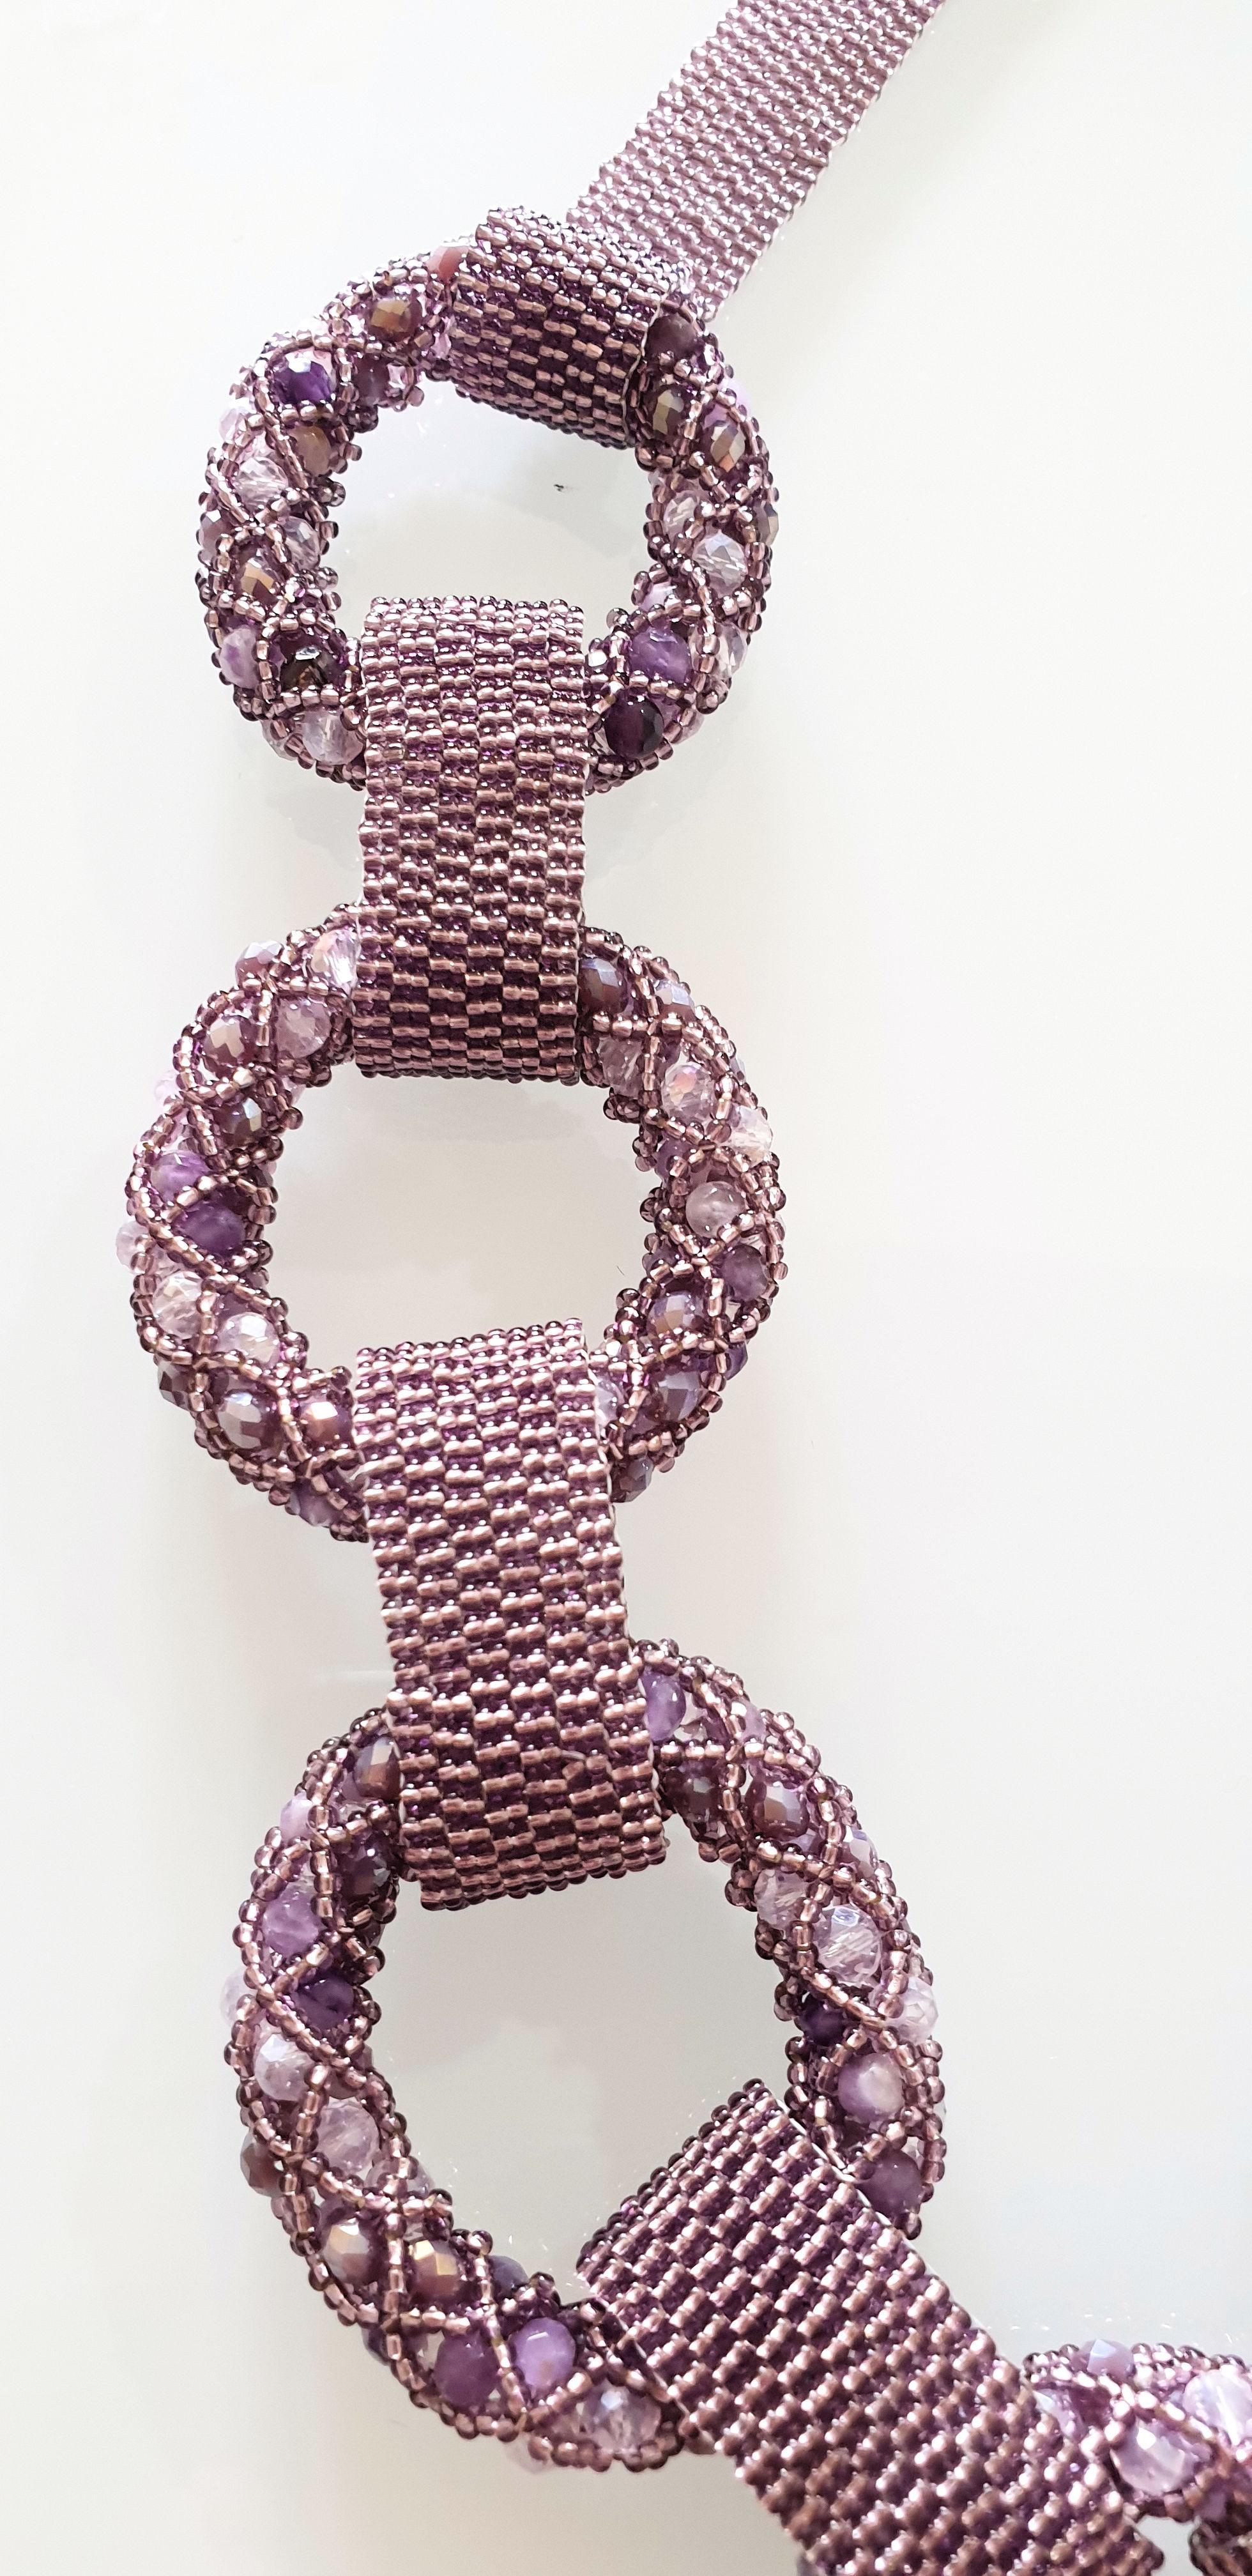 purple beads necklace